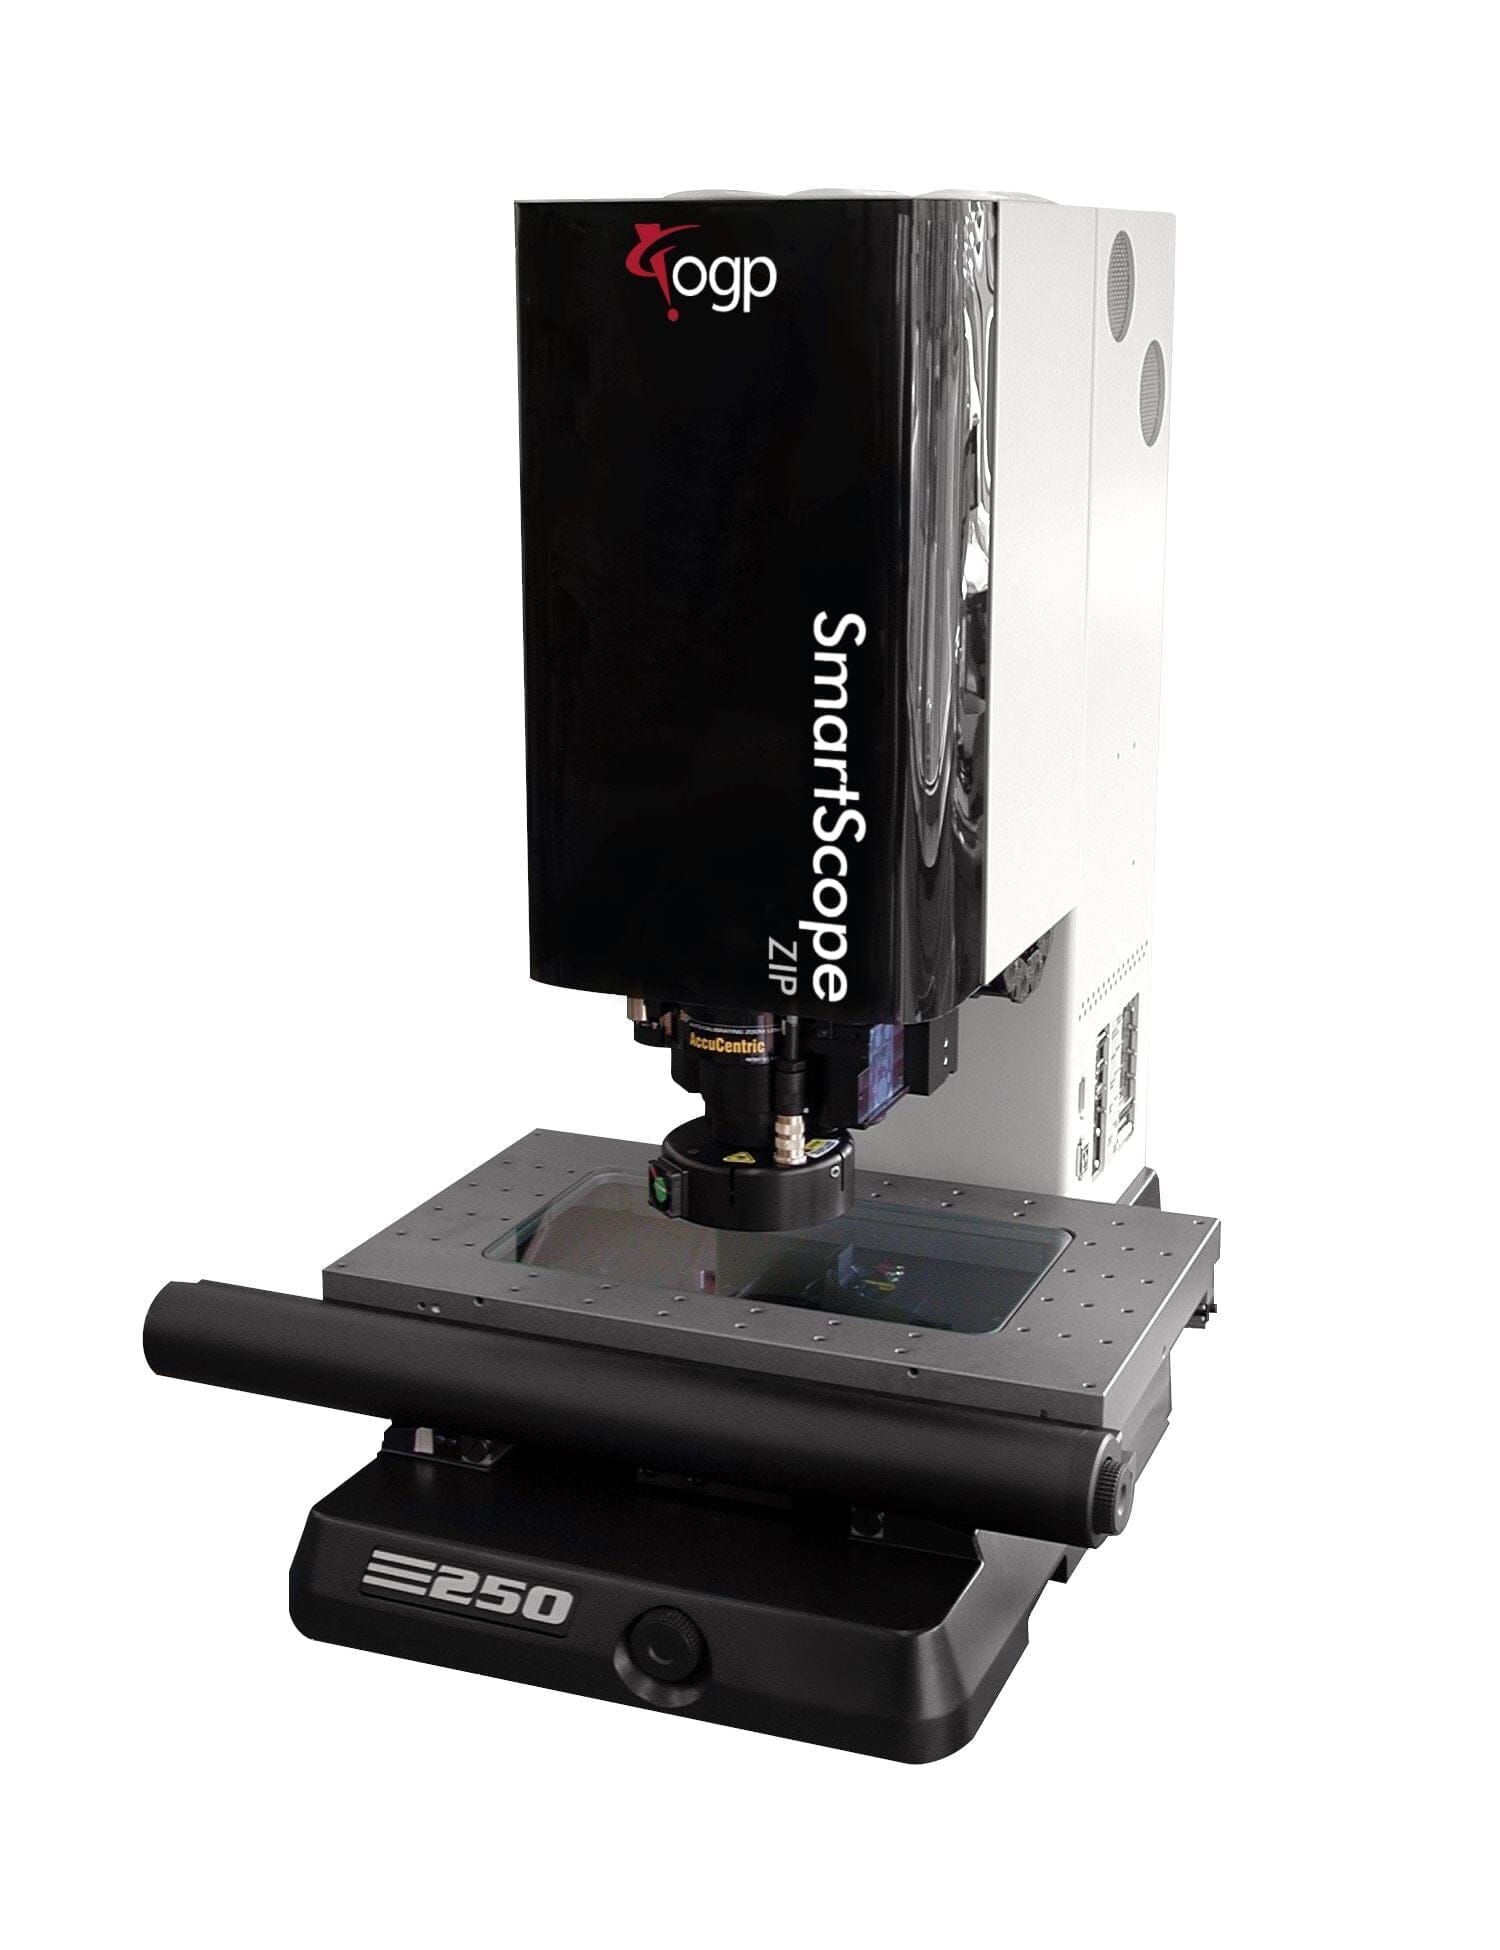 SmartScope ZIP 250 - Measurement Systems - OGP - Indicate Technologies